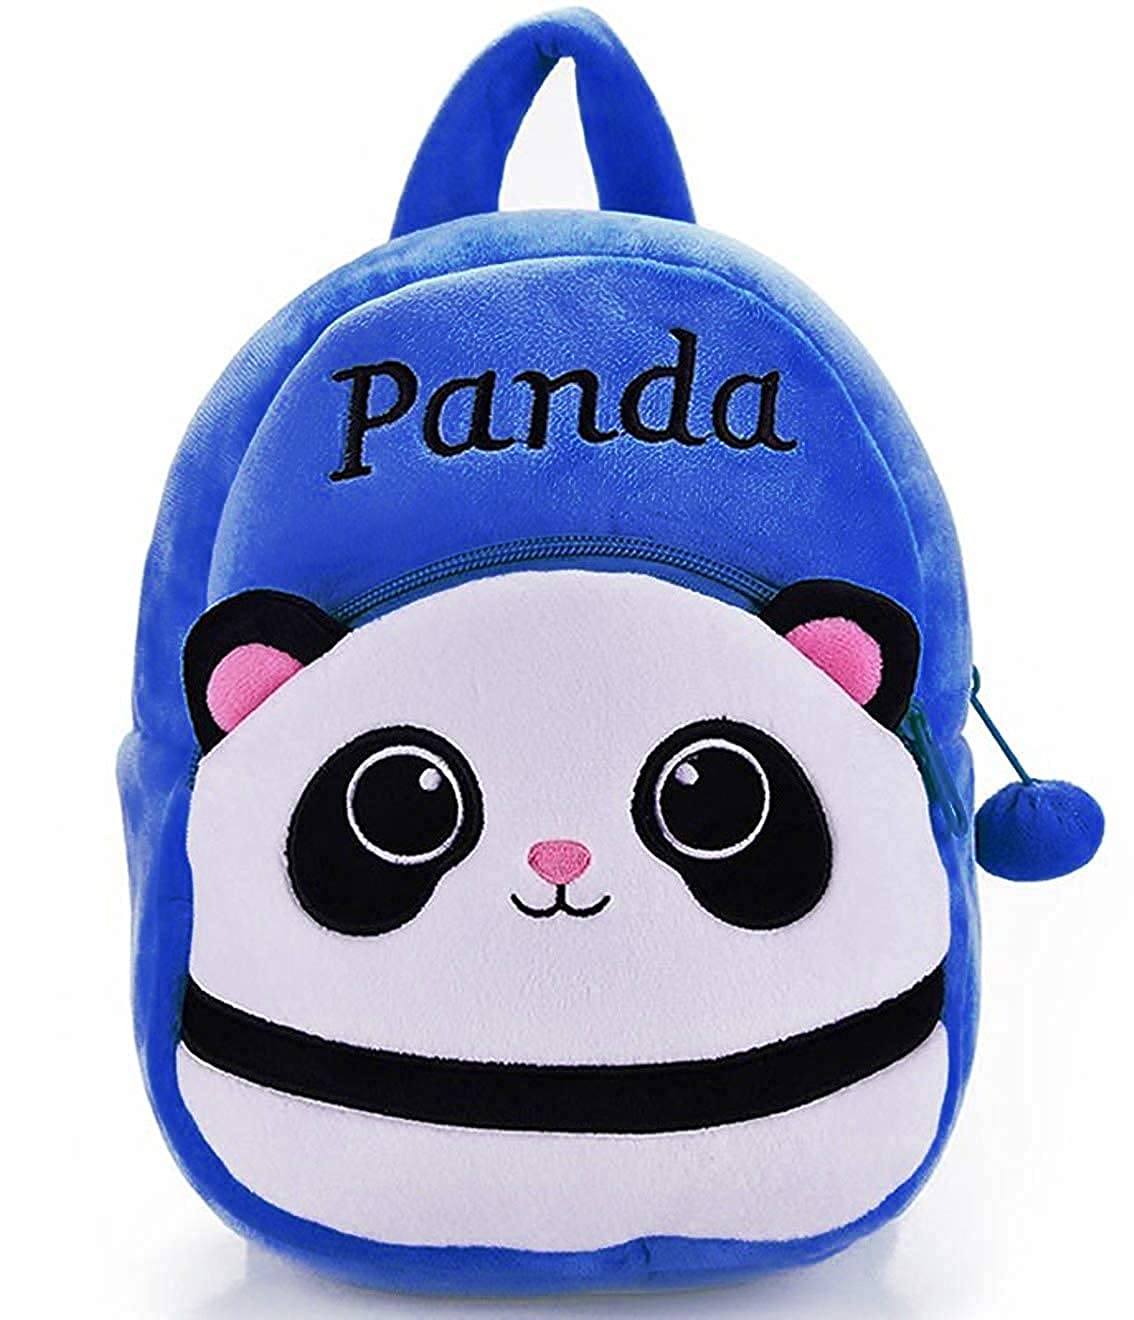 Panda Kids School Bag Soft Plush Backpack Cartoon Toy, Children's Gifts Boy Girl/Baby/ Decor School Bag for Kids  WBlue 